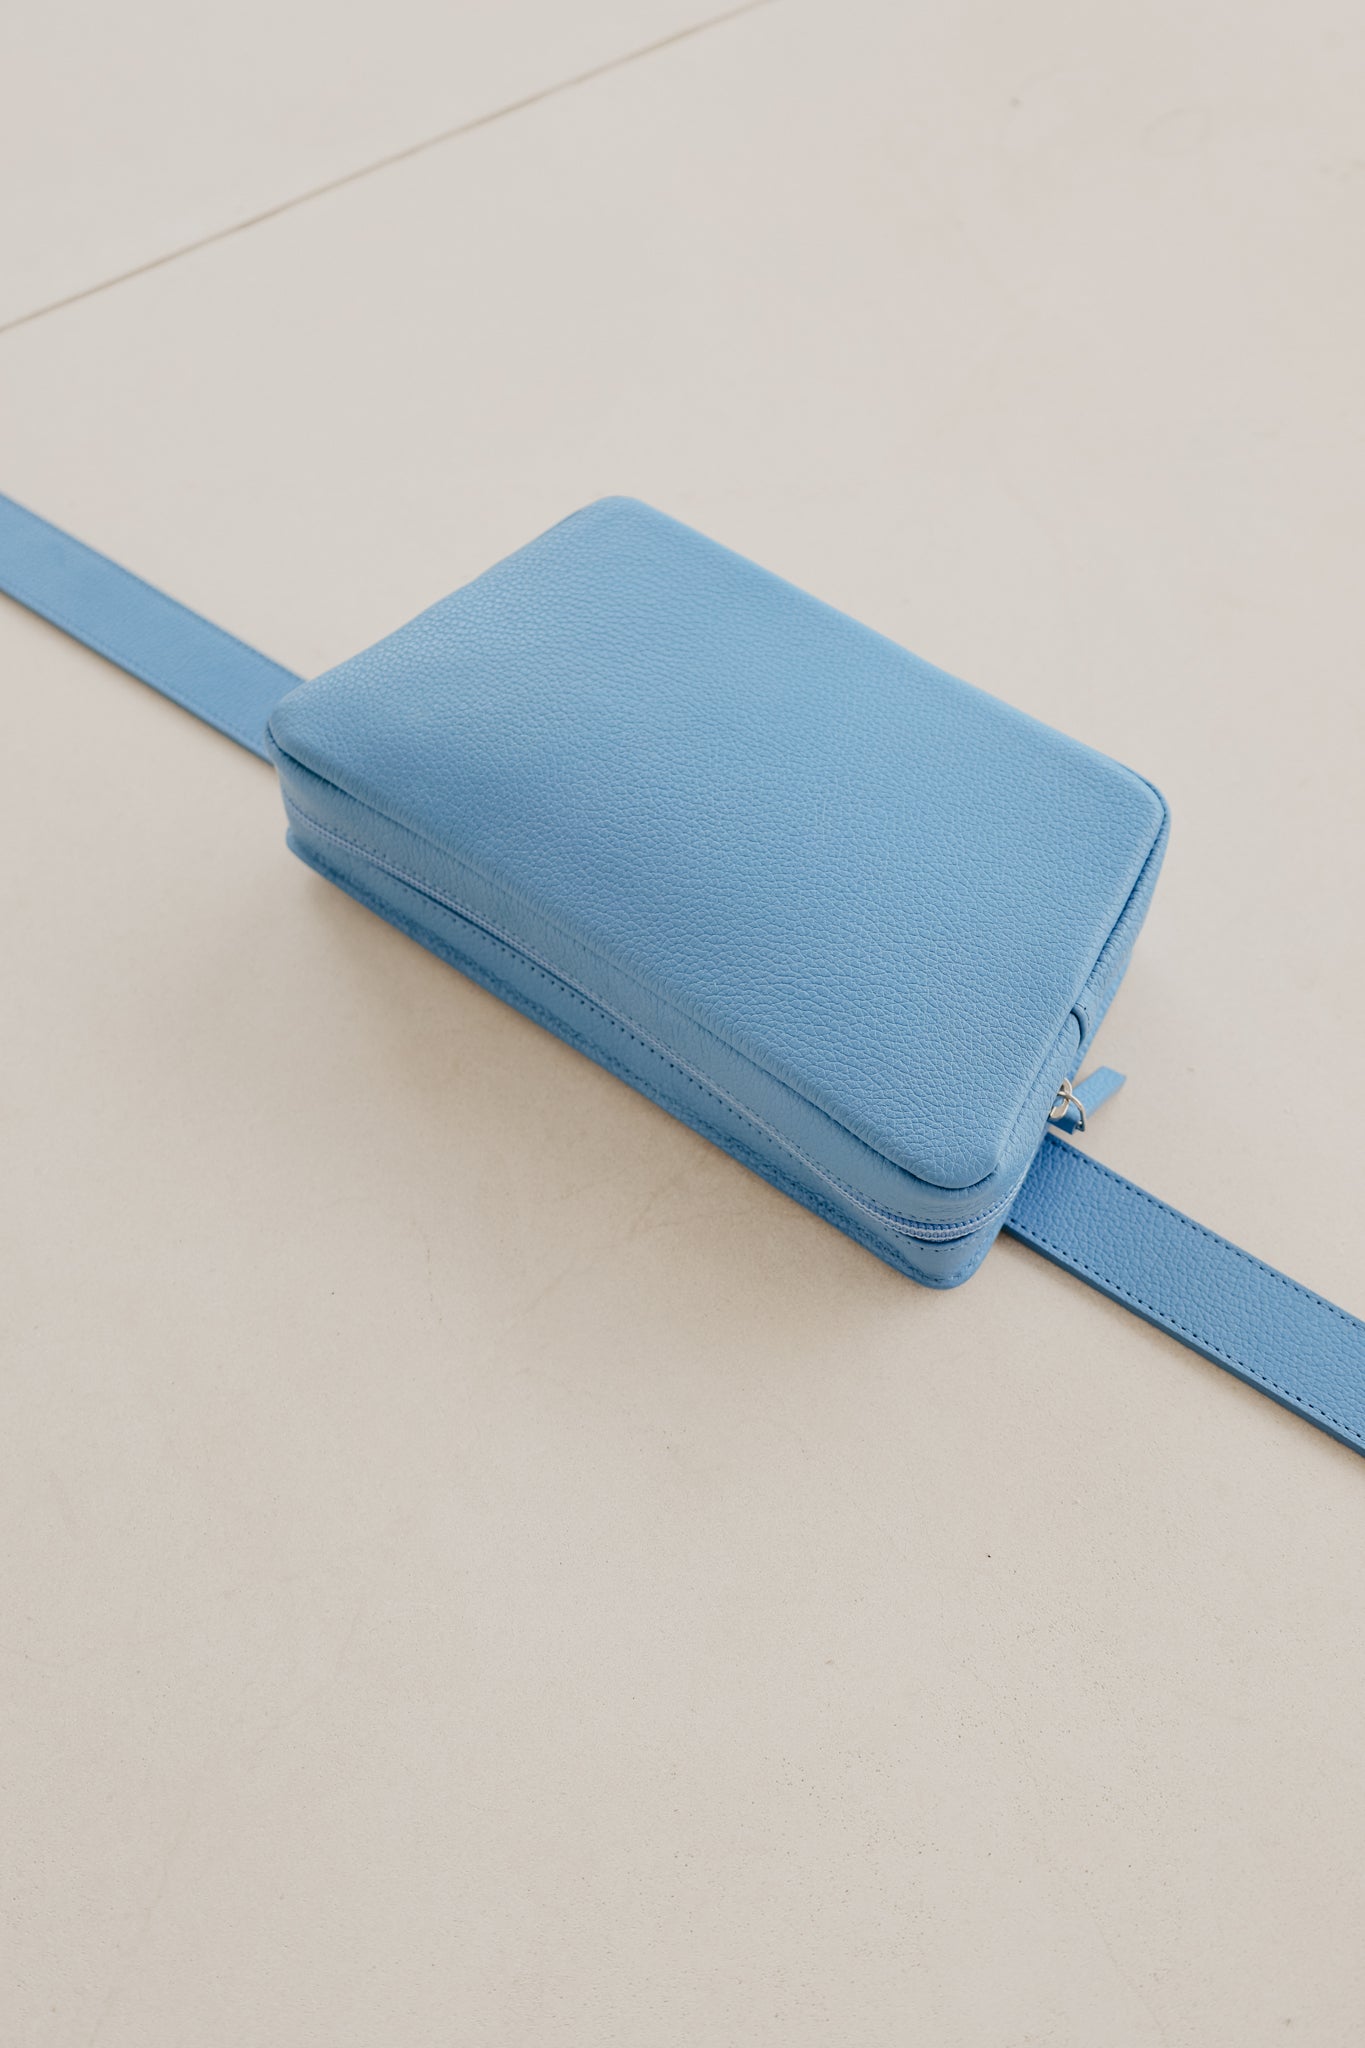 Belt Bag: Belt XL Bleu Ciel Structued + Trapezium Bleu Ciel Structured